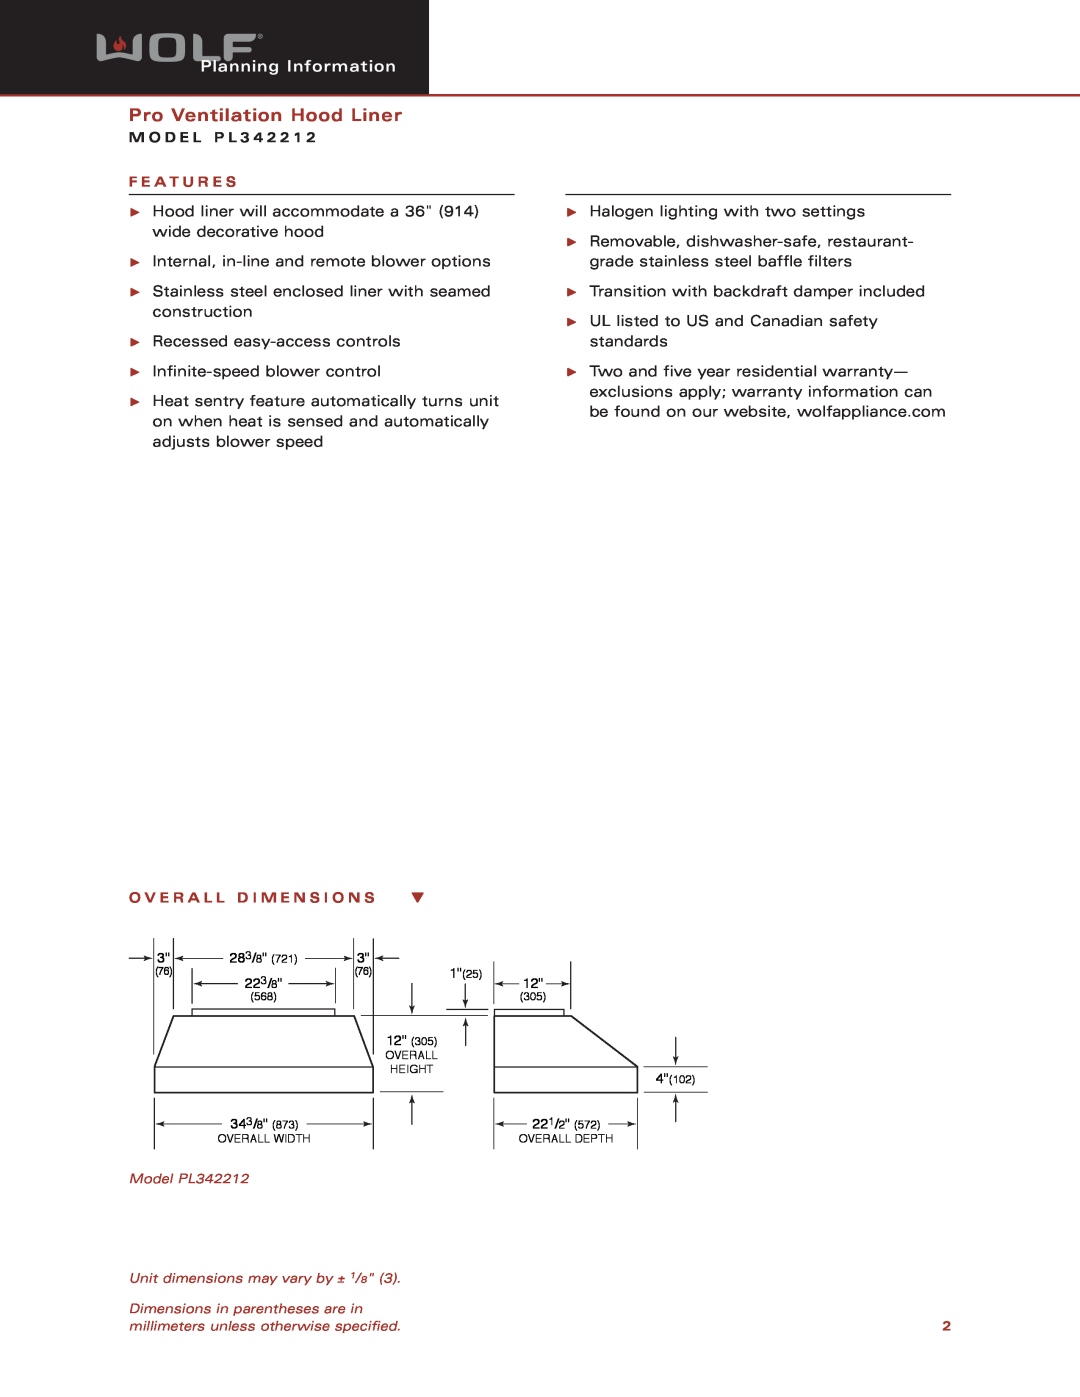 Wolf Appliance Company PL342212 Pro Ventilation Hood Liner, Planning Information, M O D E L P L 3 4 2, F E A T U R E S 